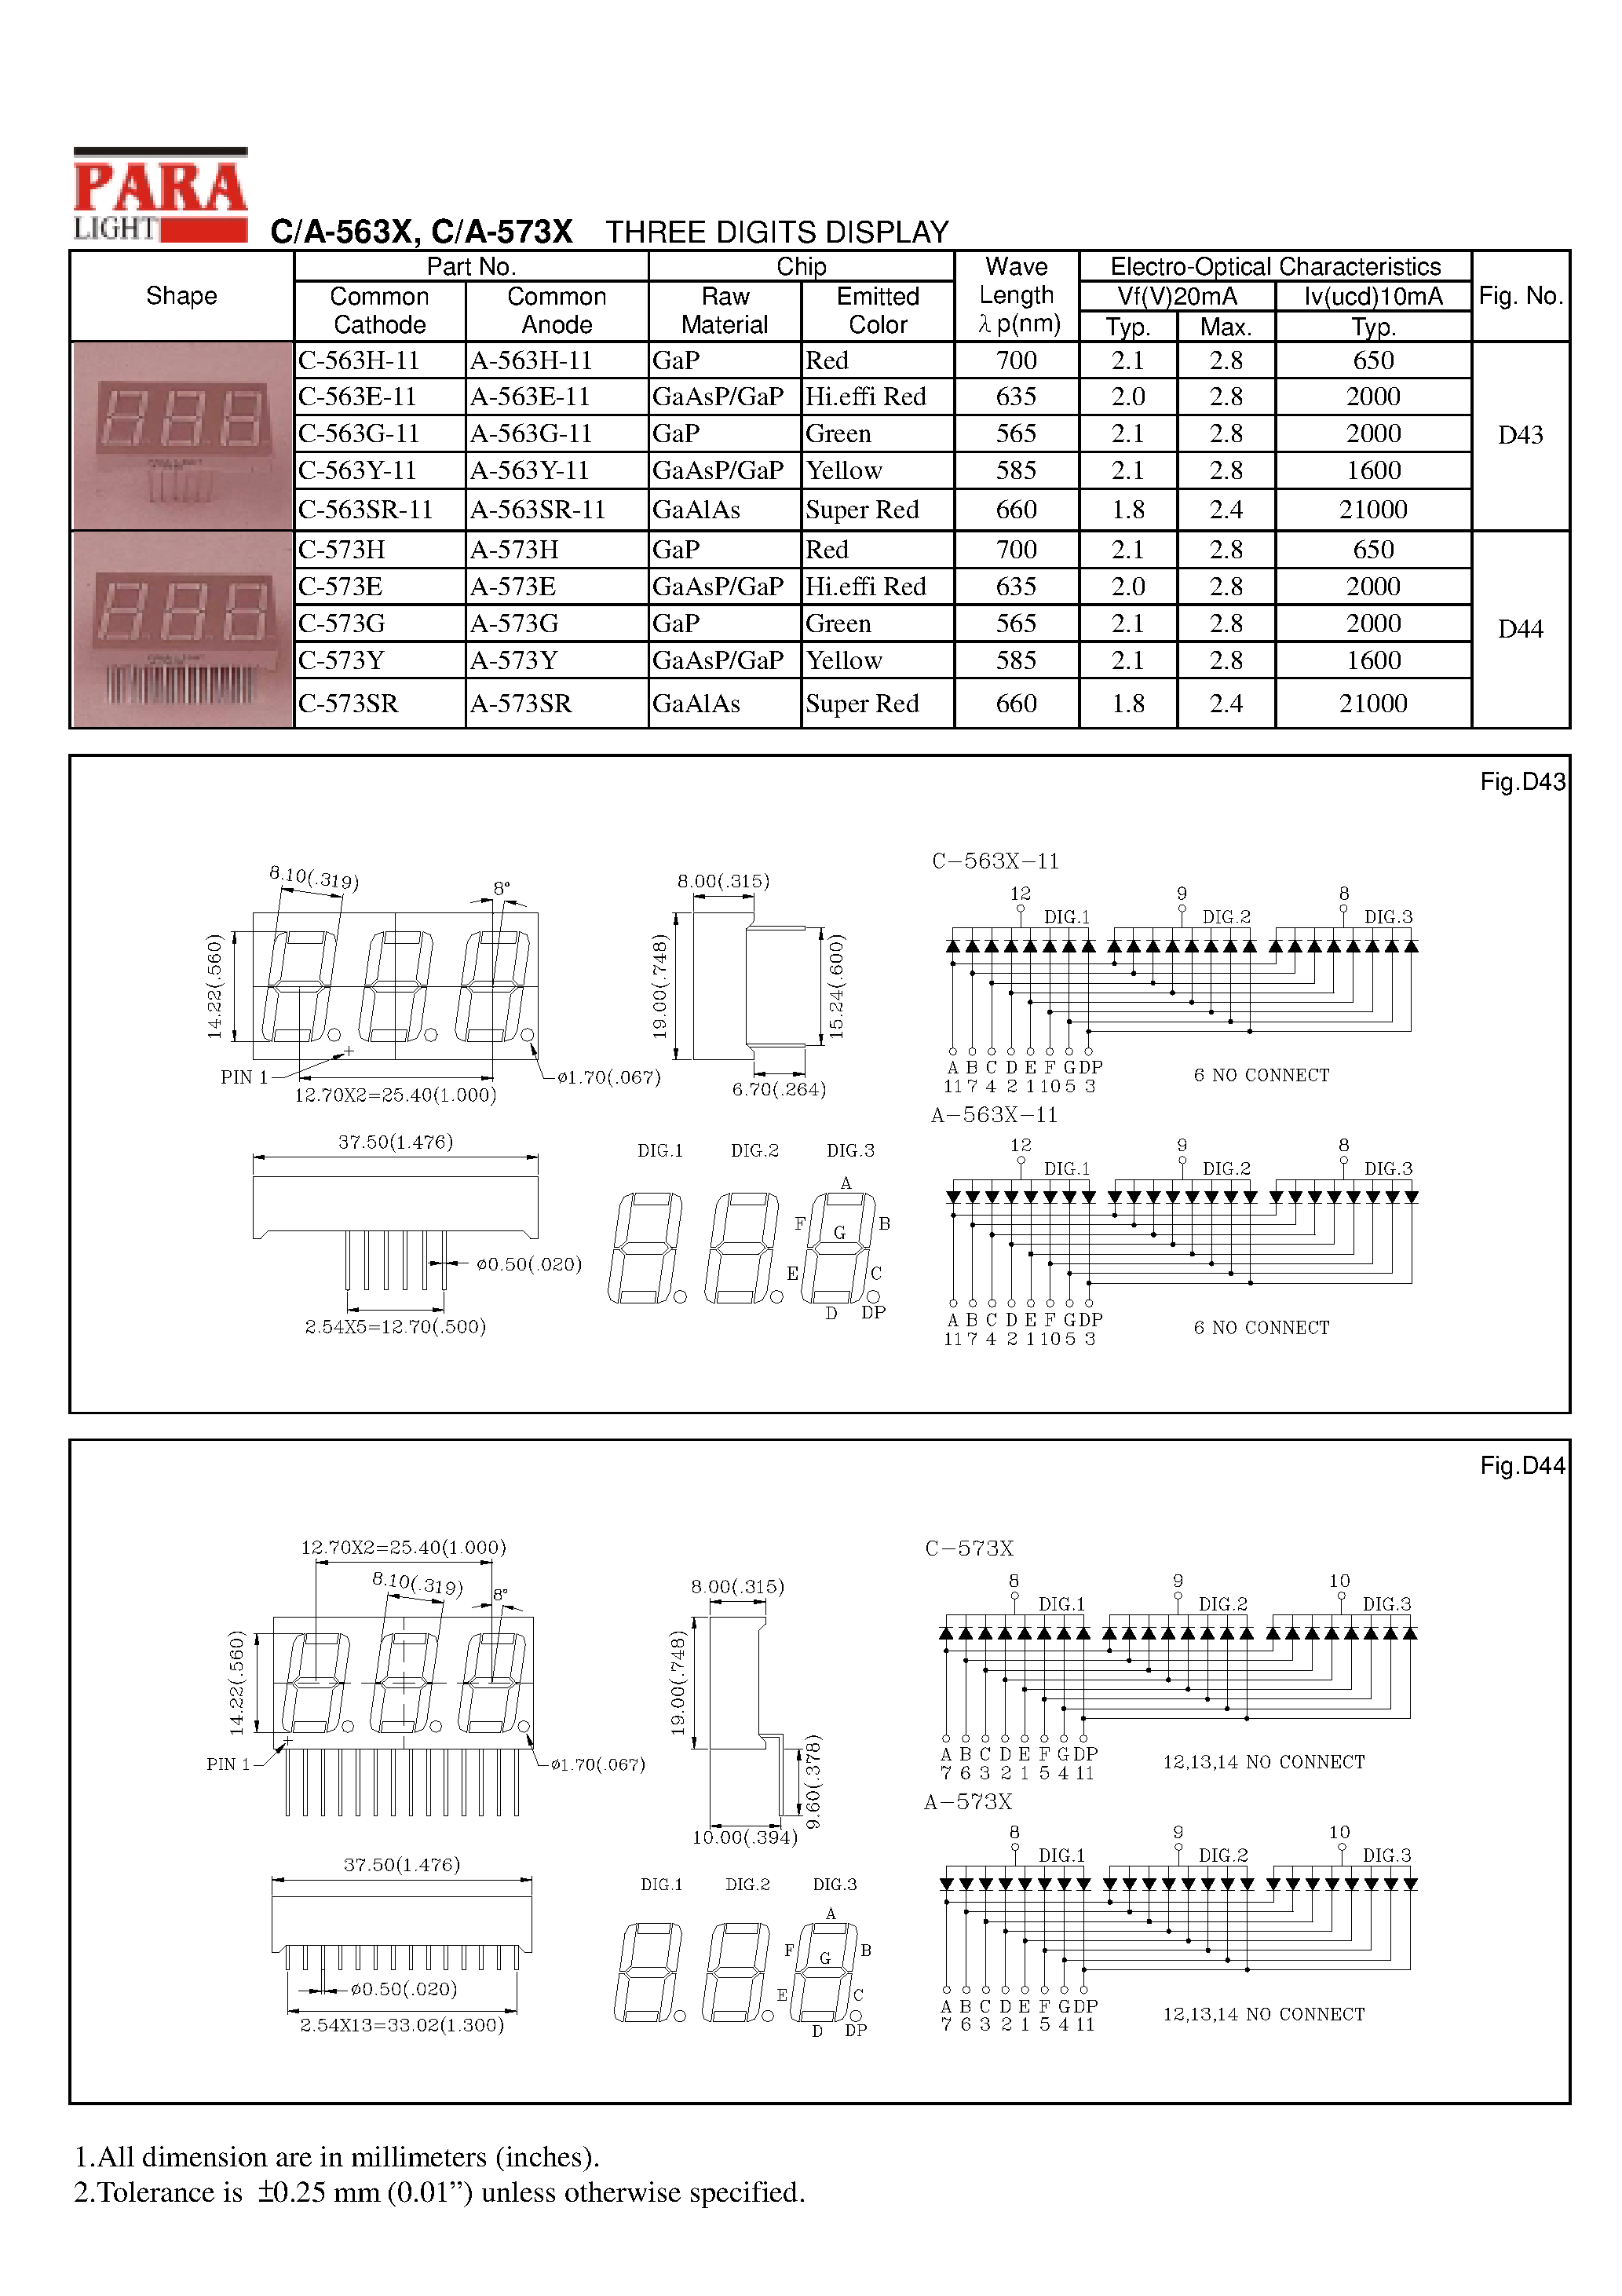 Datasheet A-573G - THREE DIGITS DISPLAY page 1